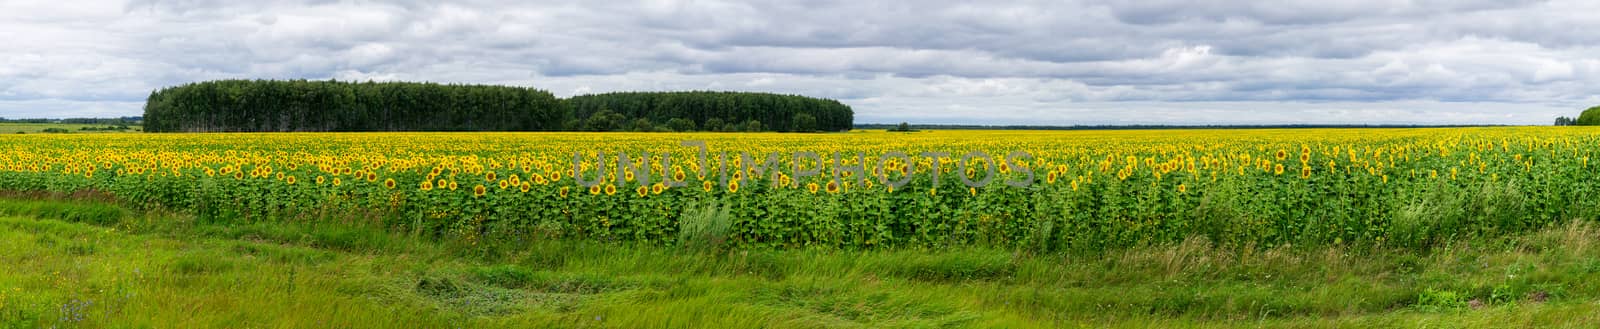 field of sunflowers by AlexBush